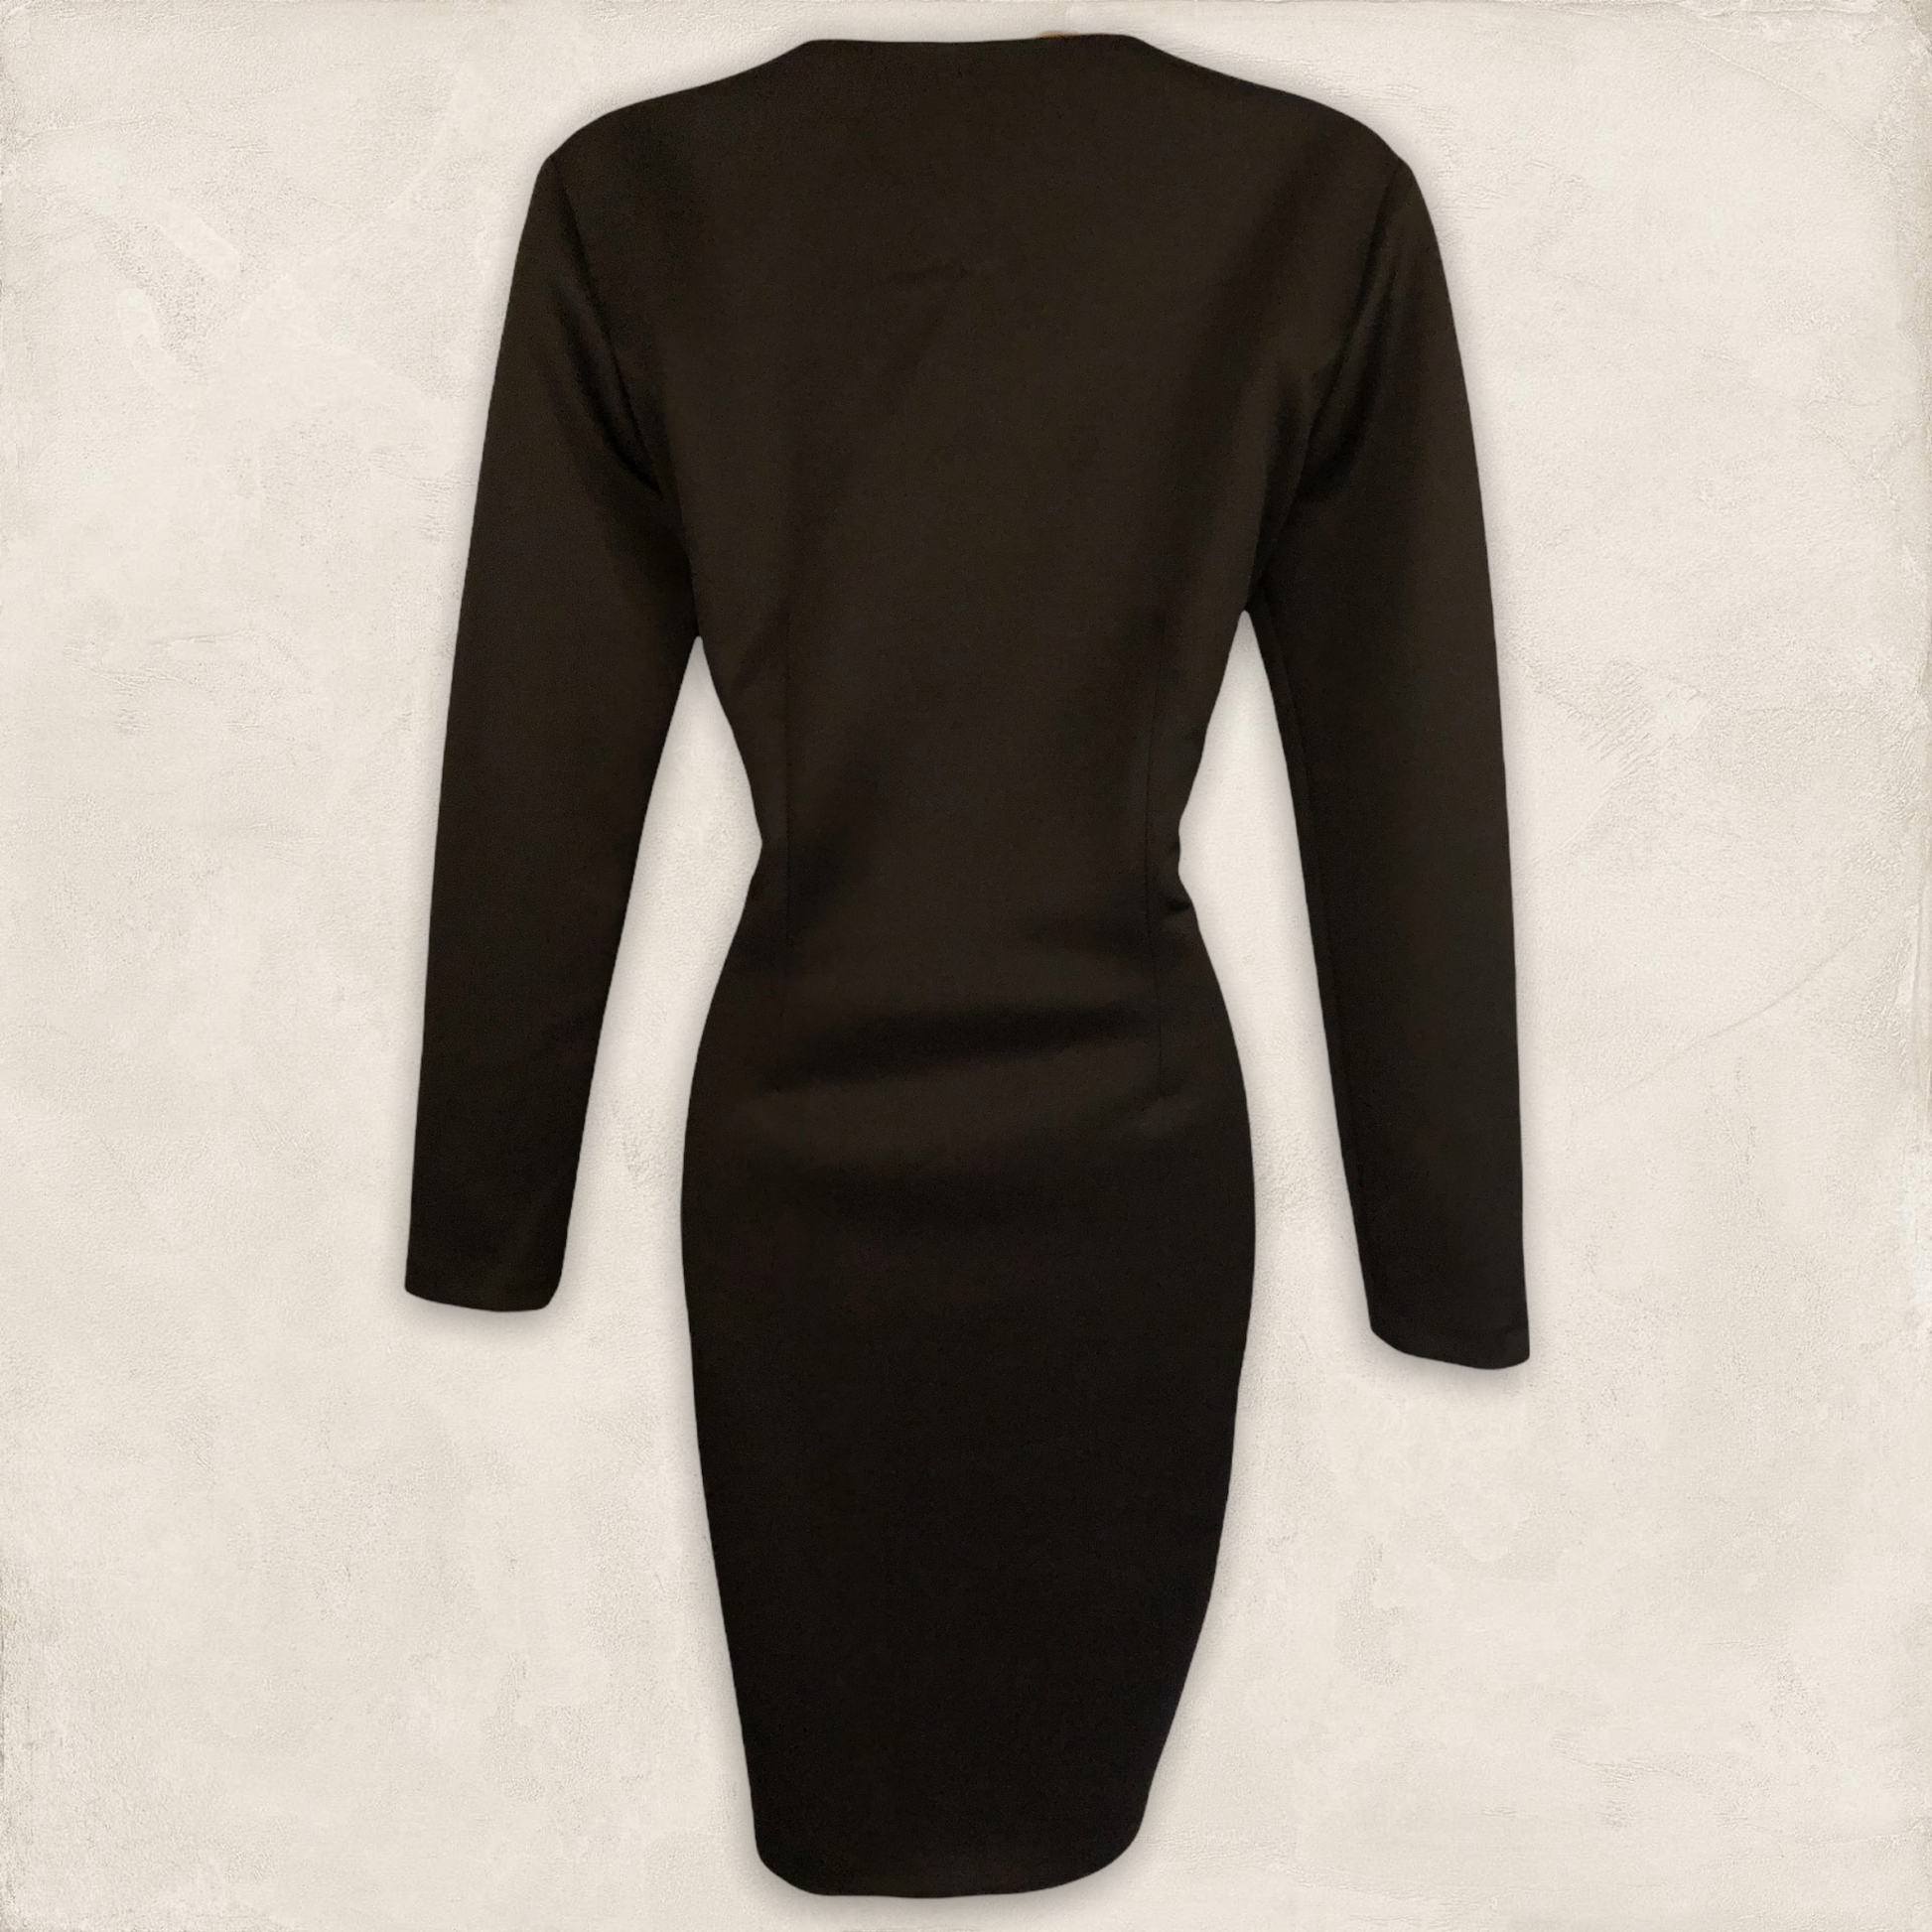 Michaela Louisa Black & Red Sequin Silhouette Dress UK 10 US 6 EU 38 Timeless Fashions